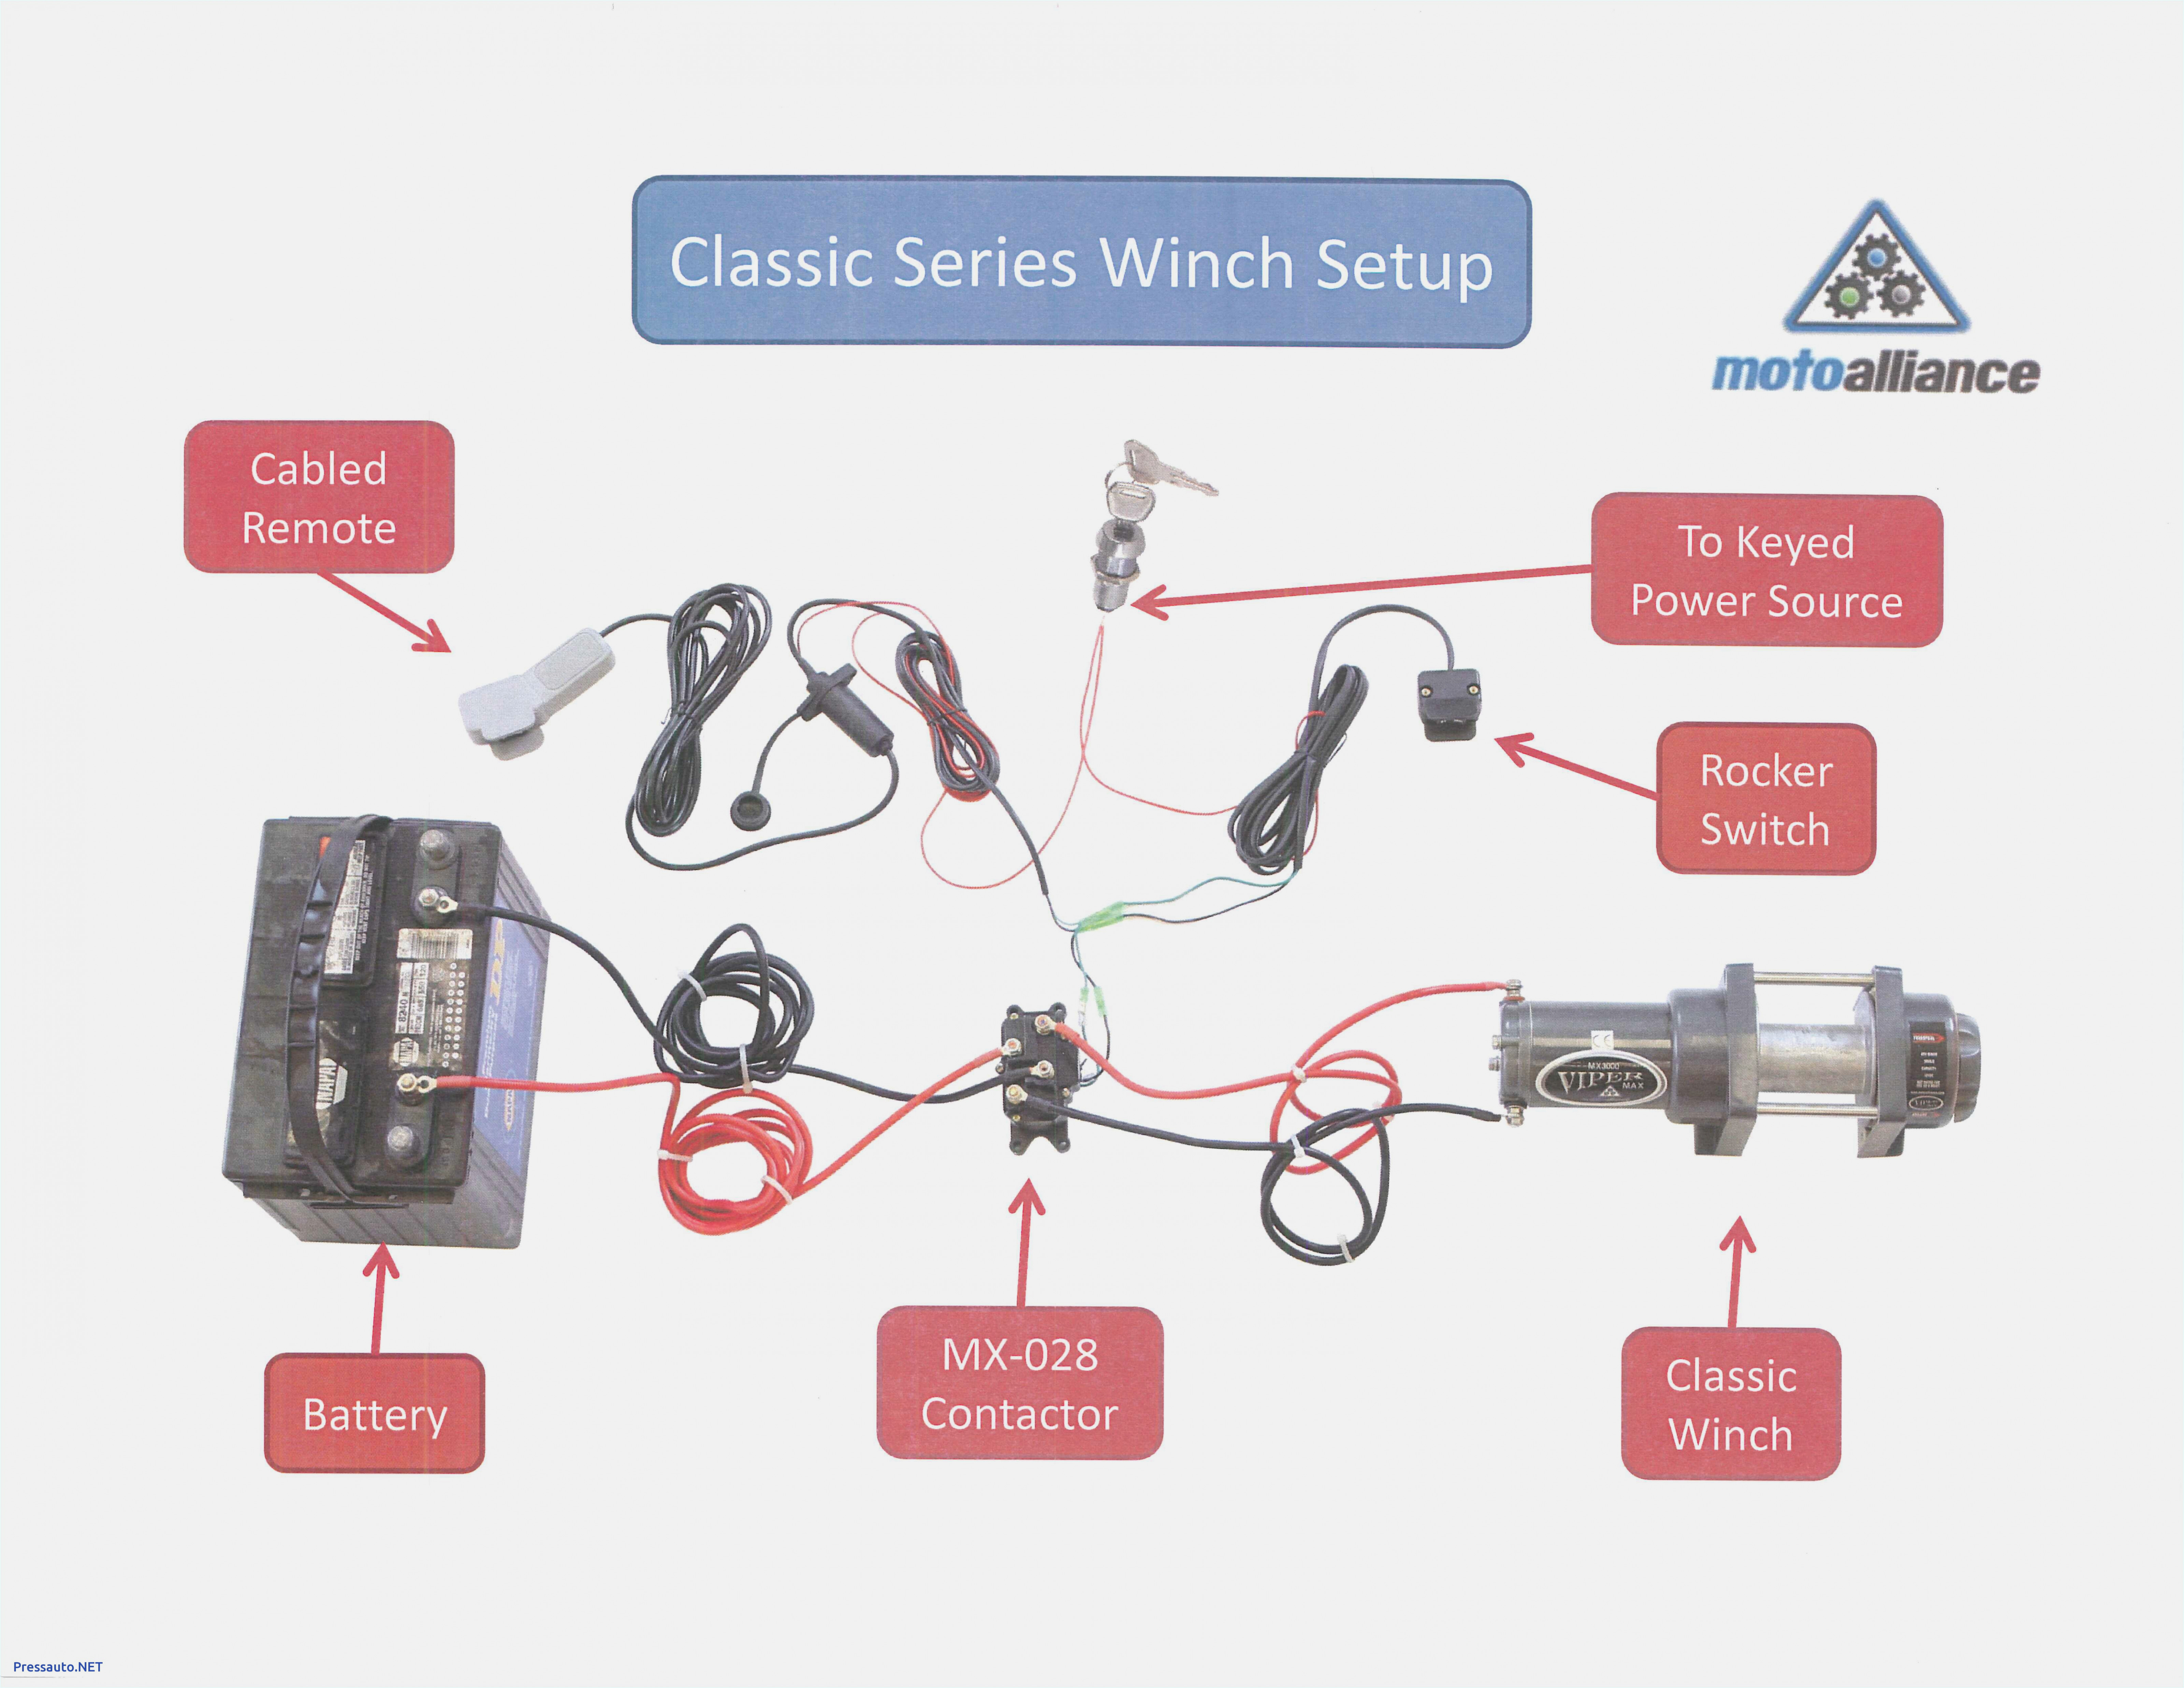 warn rocker switch wiring diagram free download wiring diagram user warn rocker switch wiring diagram warn